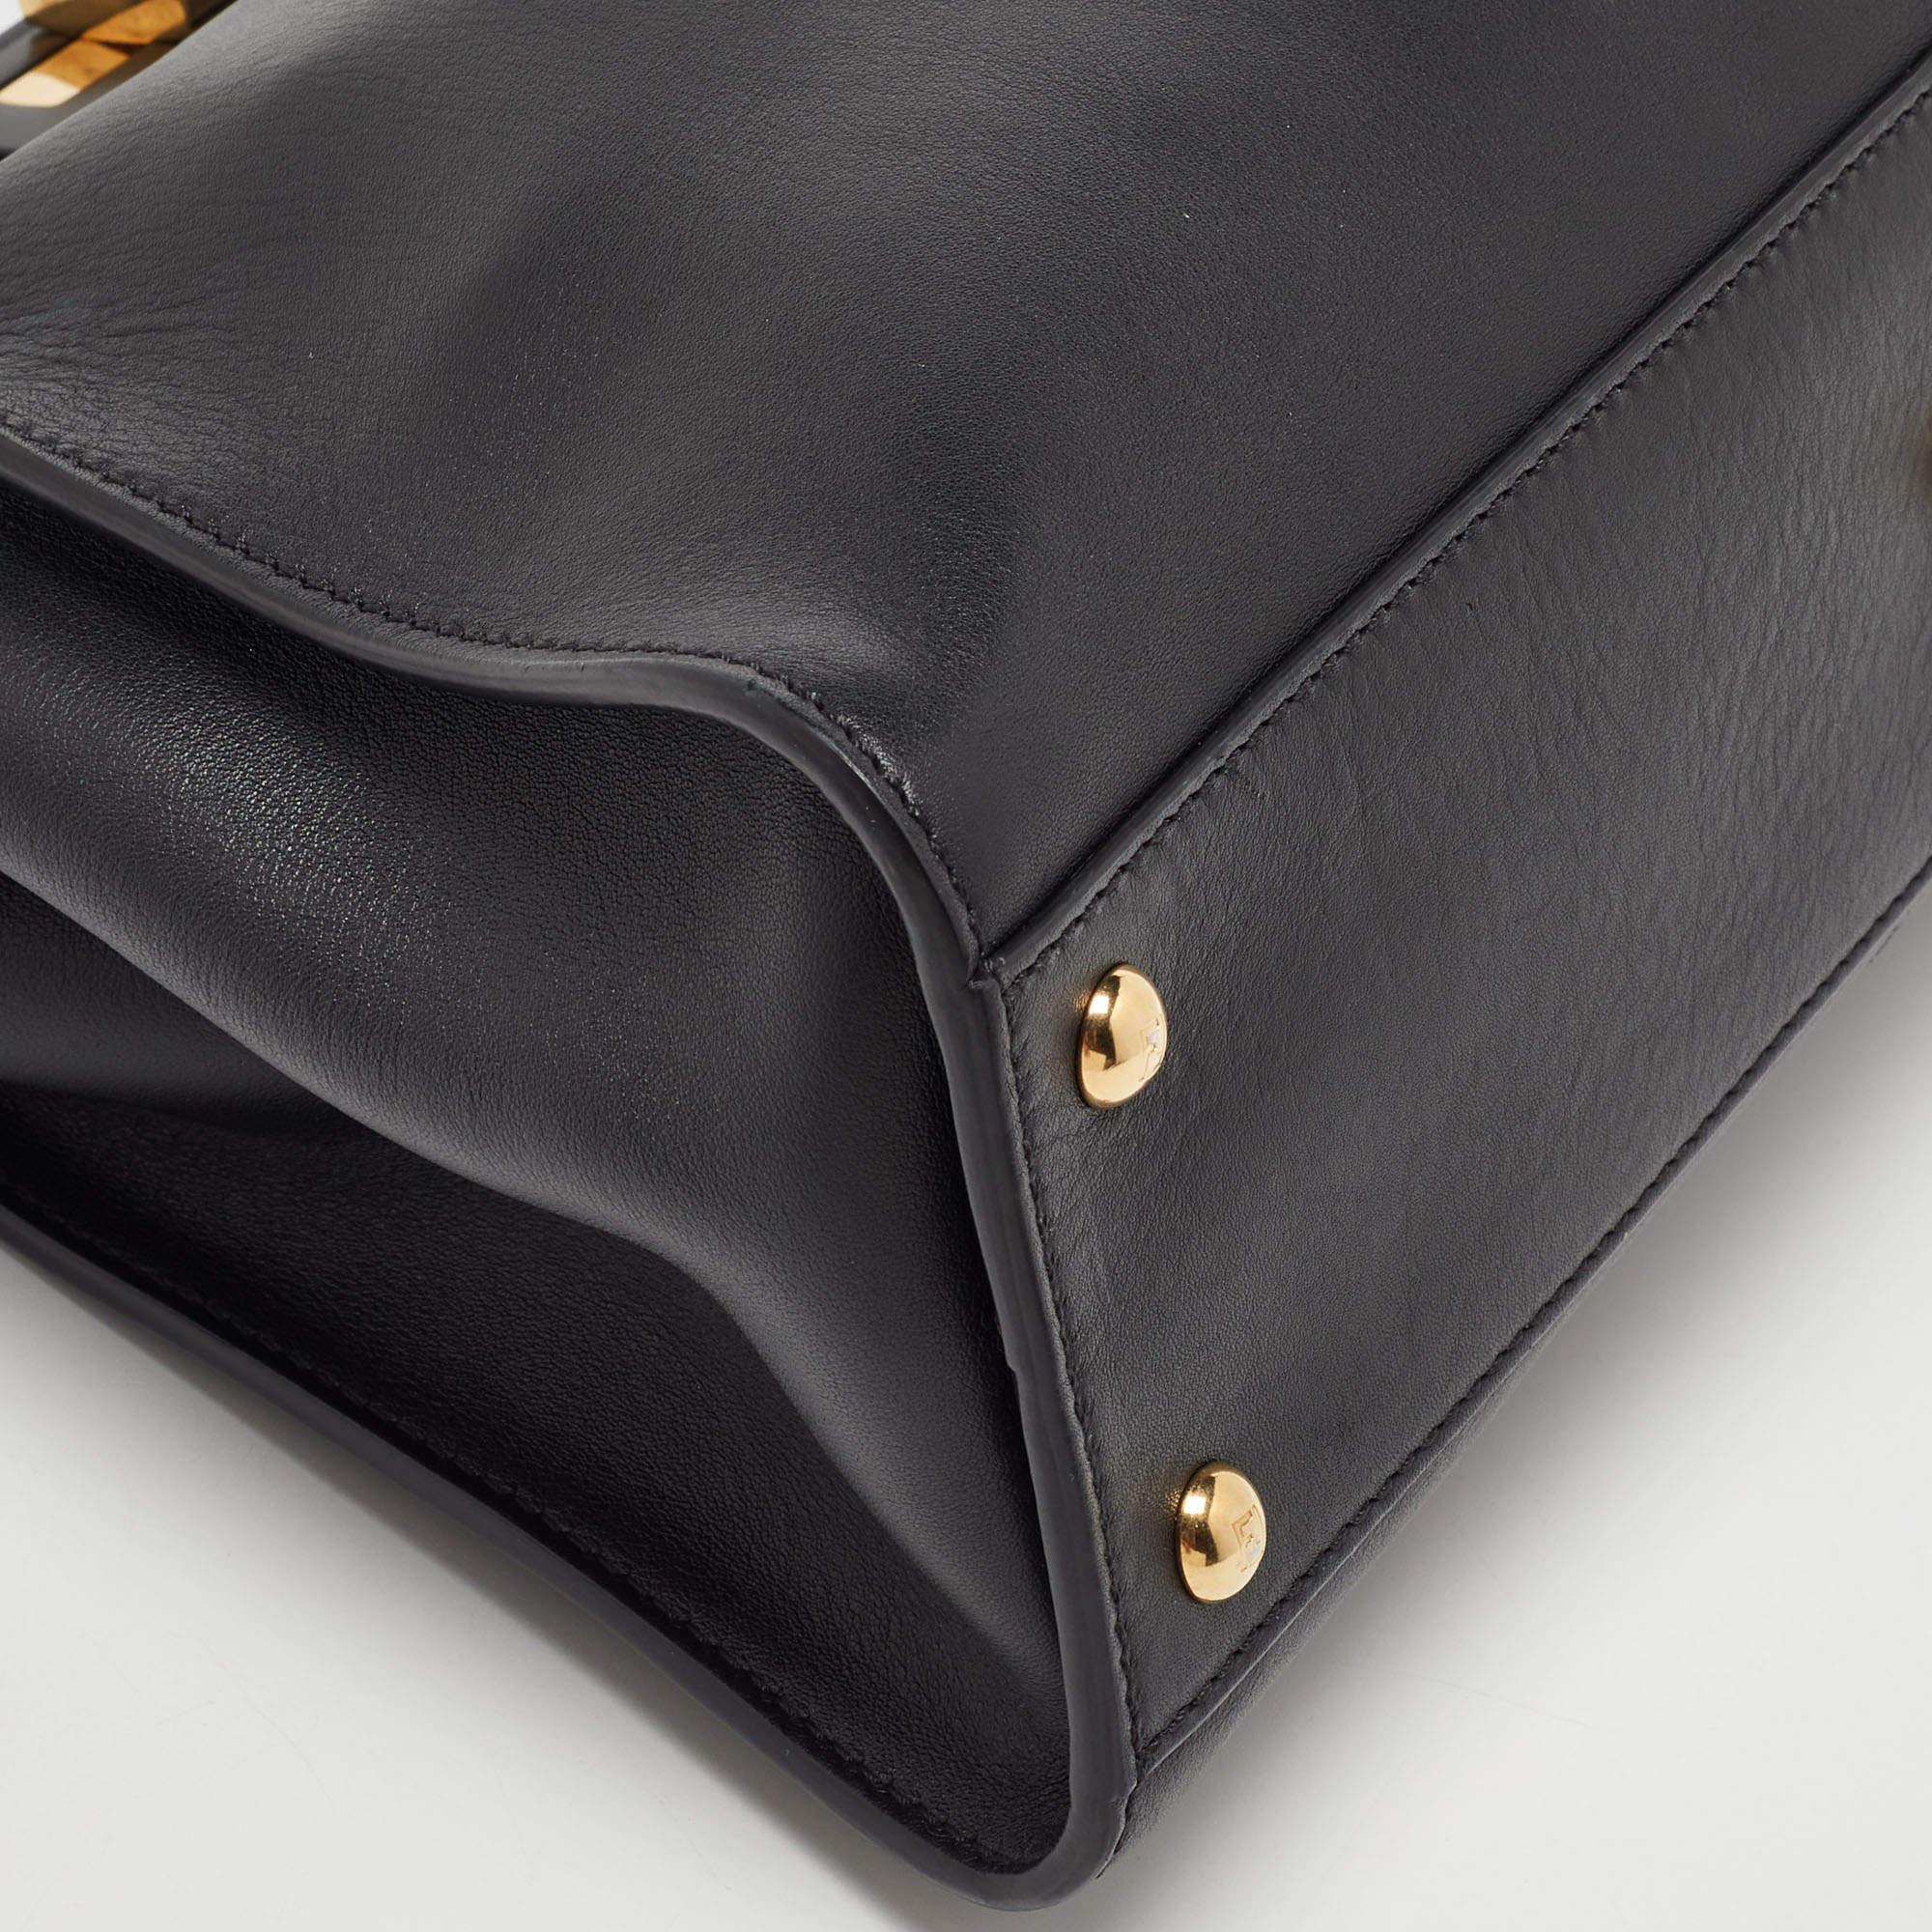 Fendi Black Leather Regular Peekaboo Top Handle Bag For Sale 1